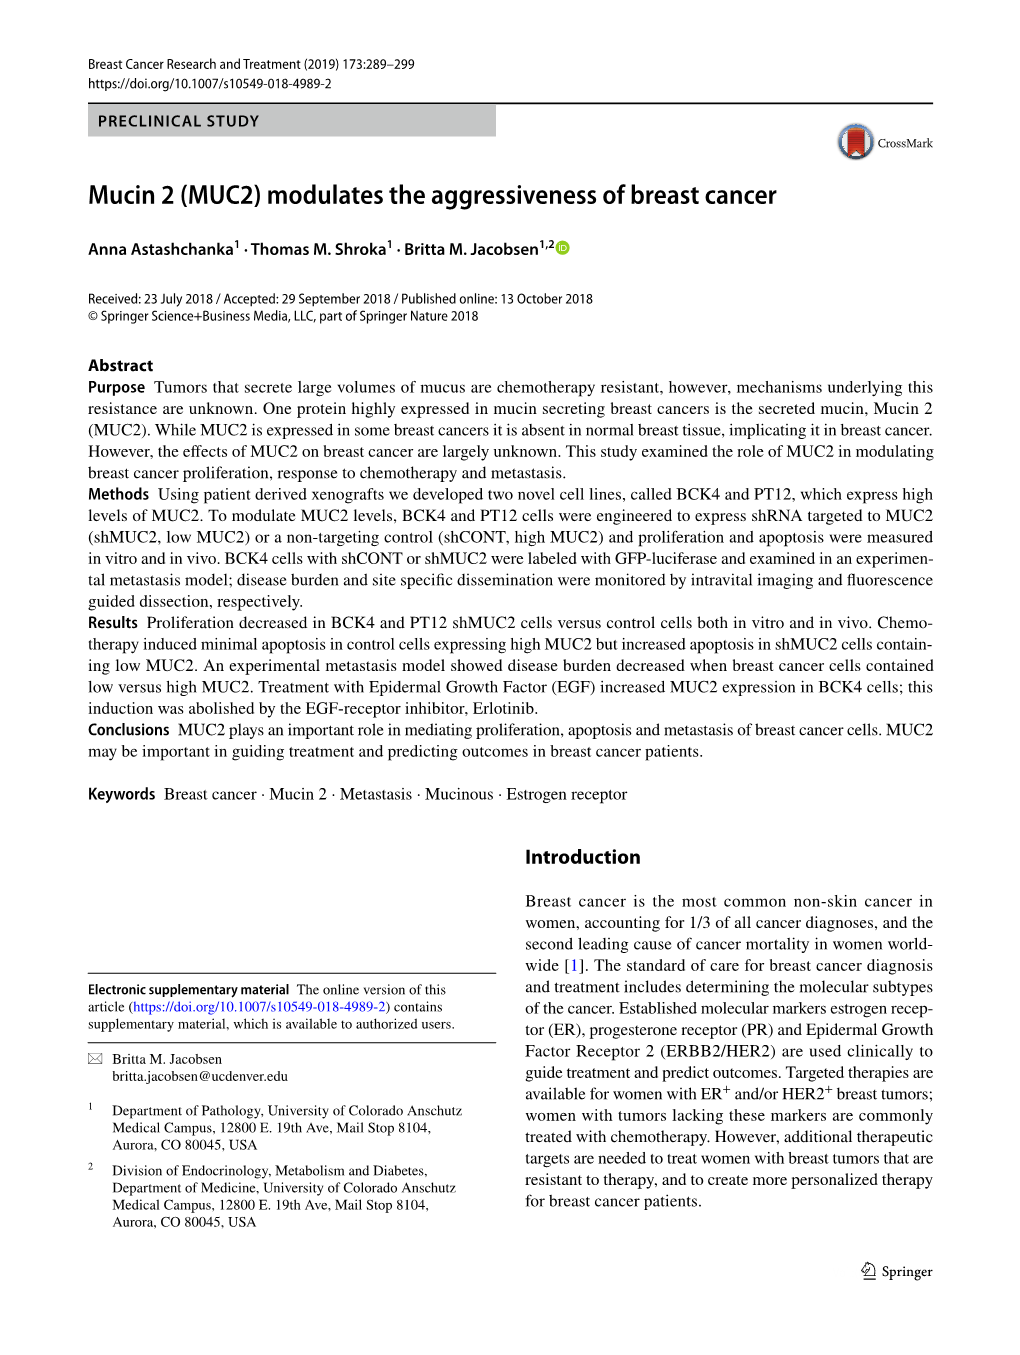 Mucin 2 (MUC2) Modulates the Aggressiveness of Breast Cancer